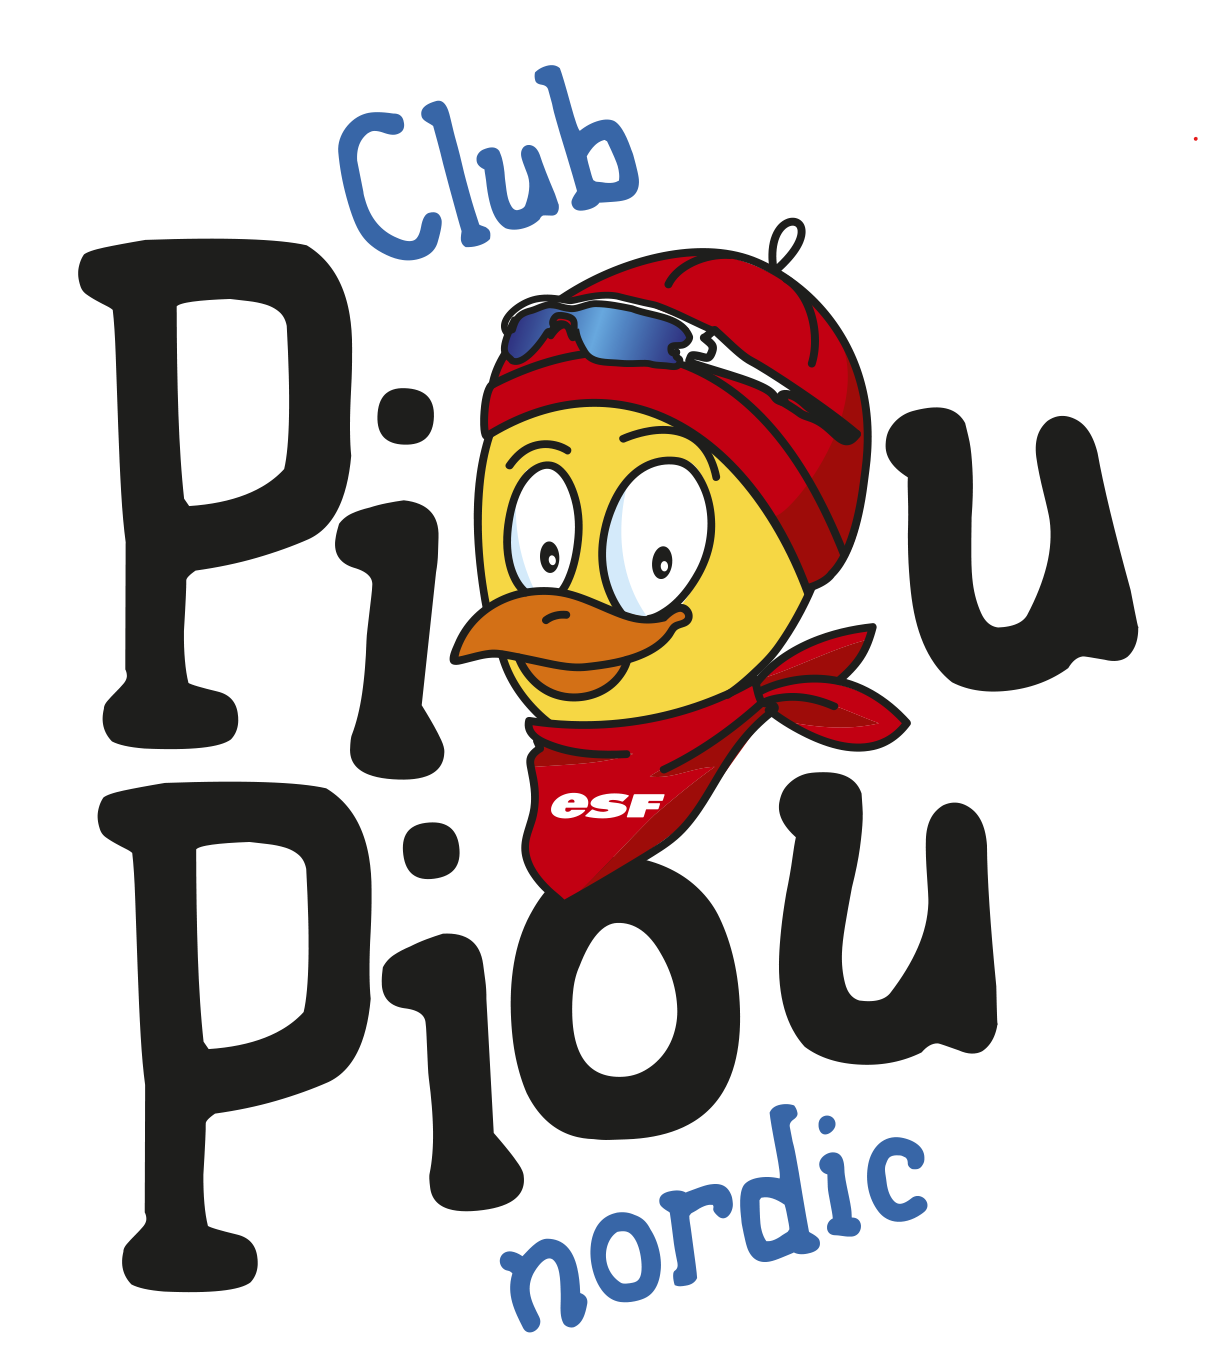 Cours club Piou-Piou nordic